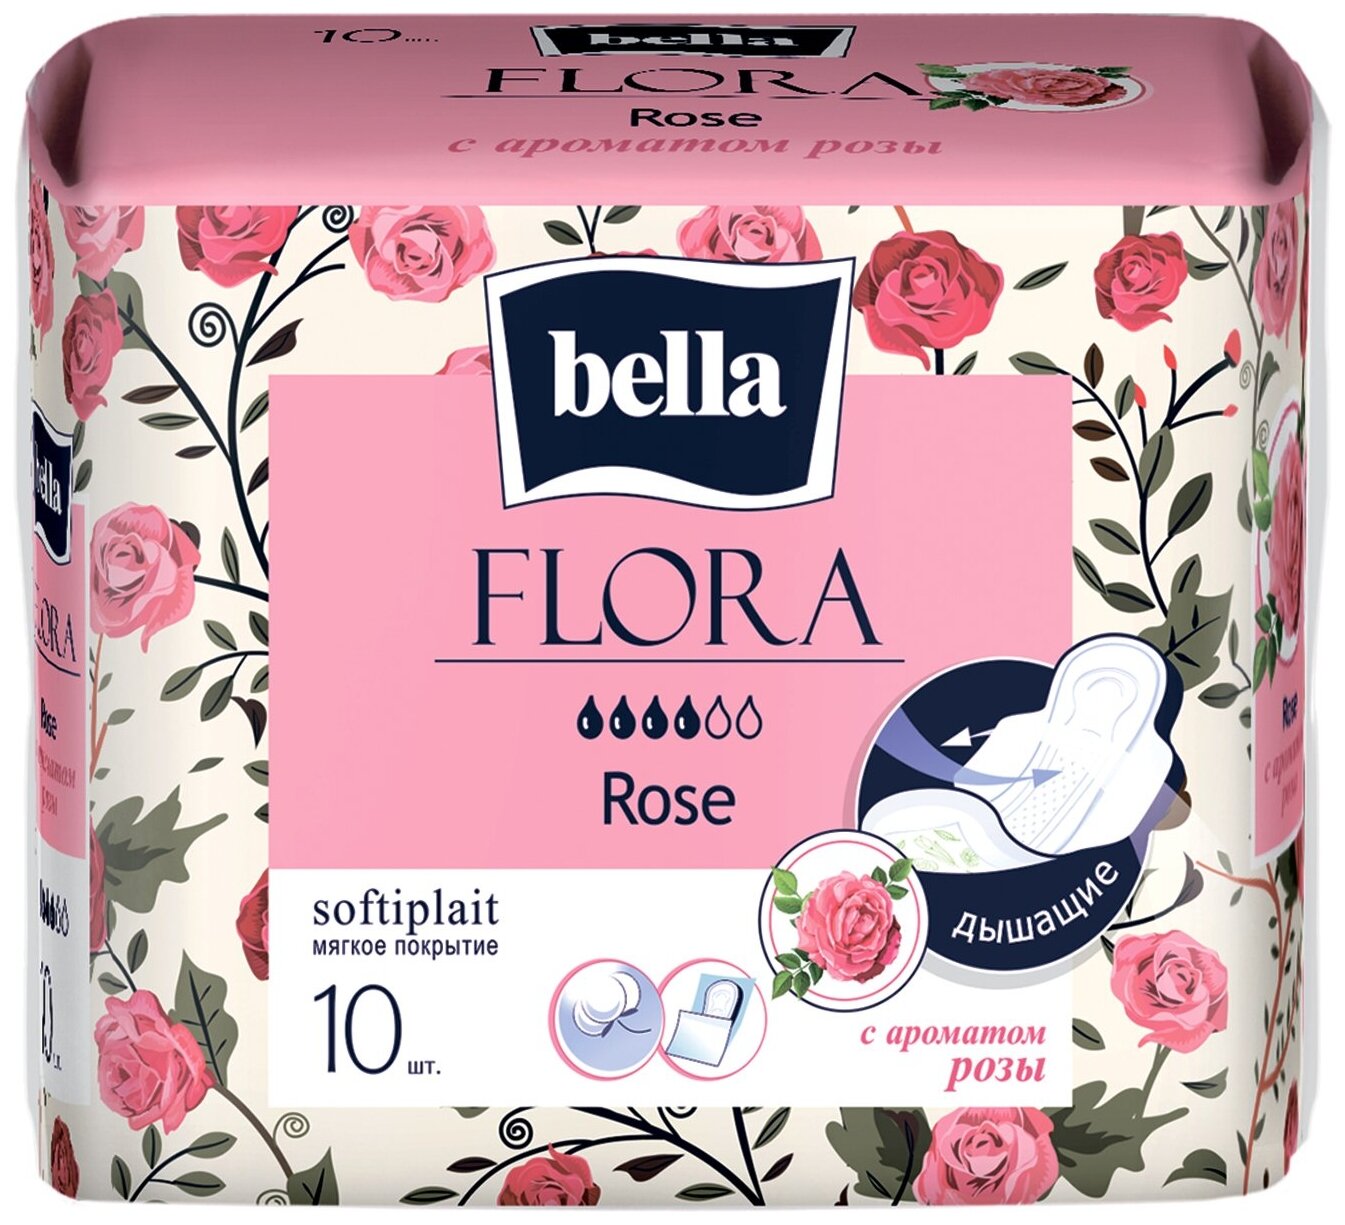 Bella прокладки Flora rose, 4 капли, 10 шт.